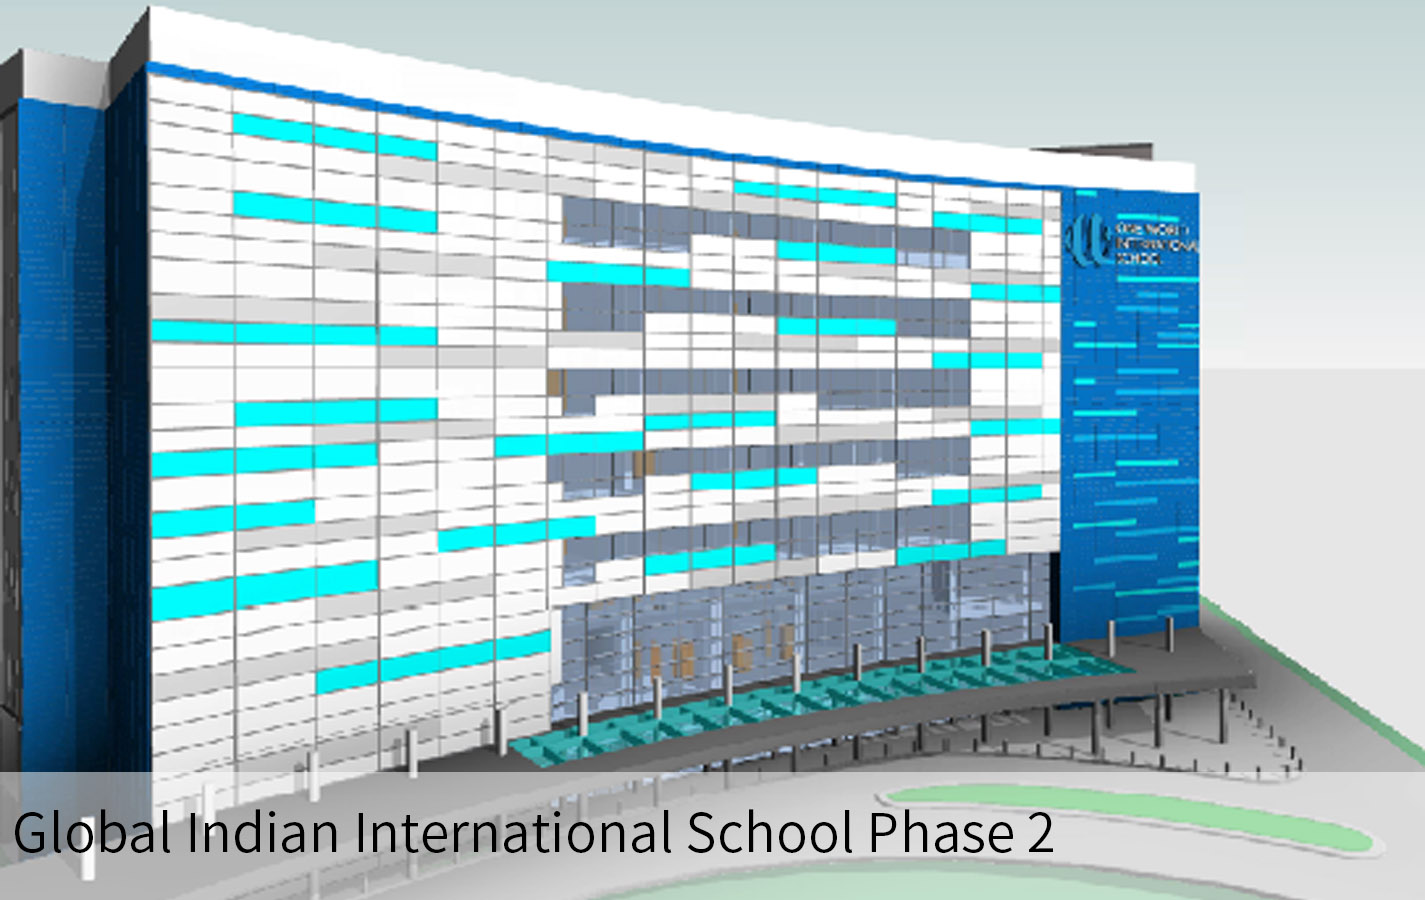 Global Indian International School Phase 2, Singapore